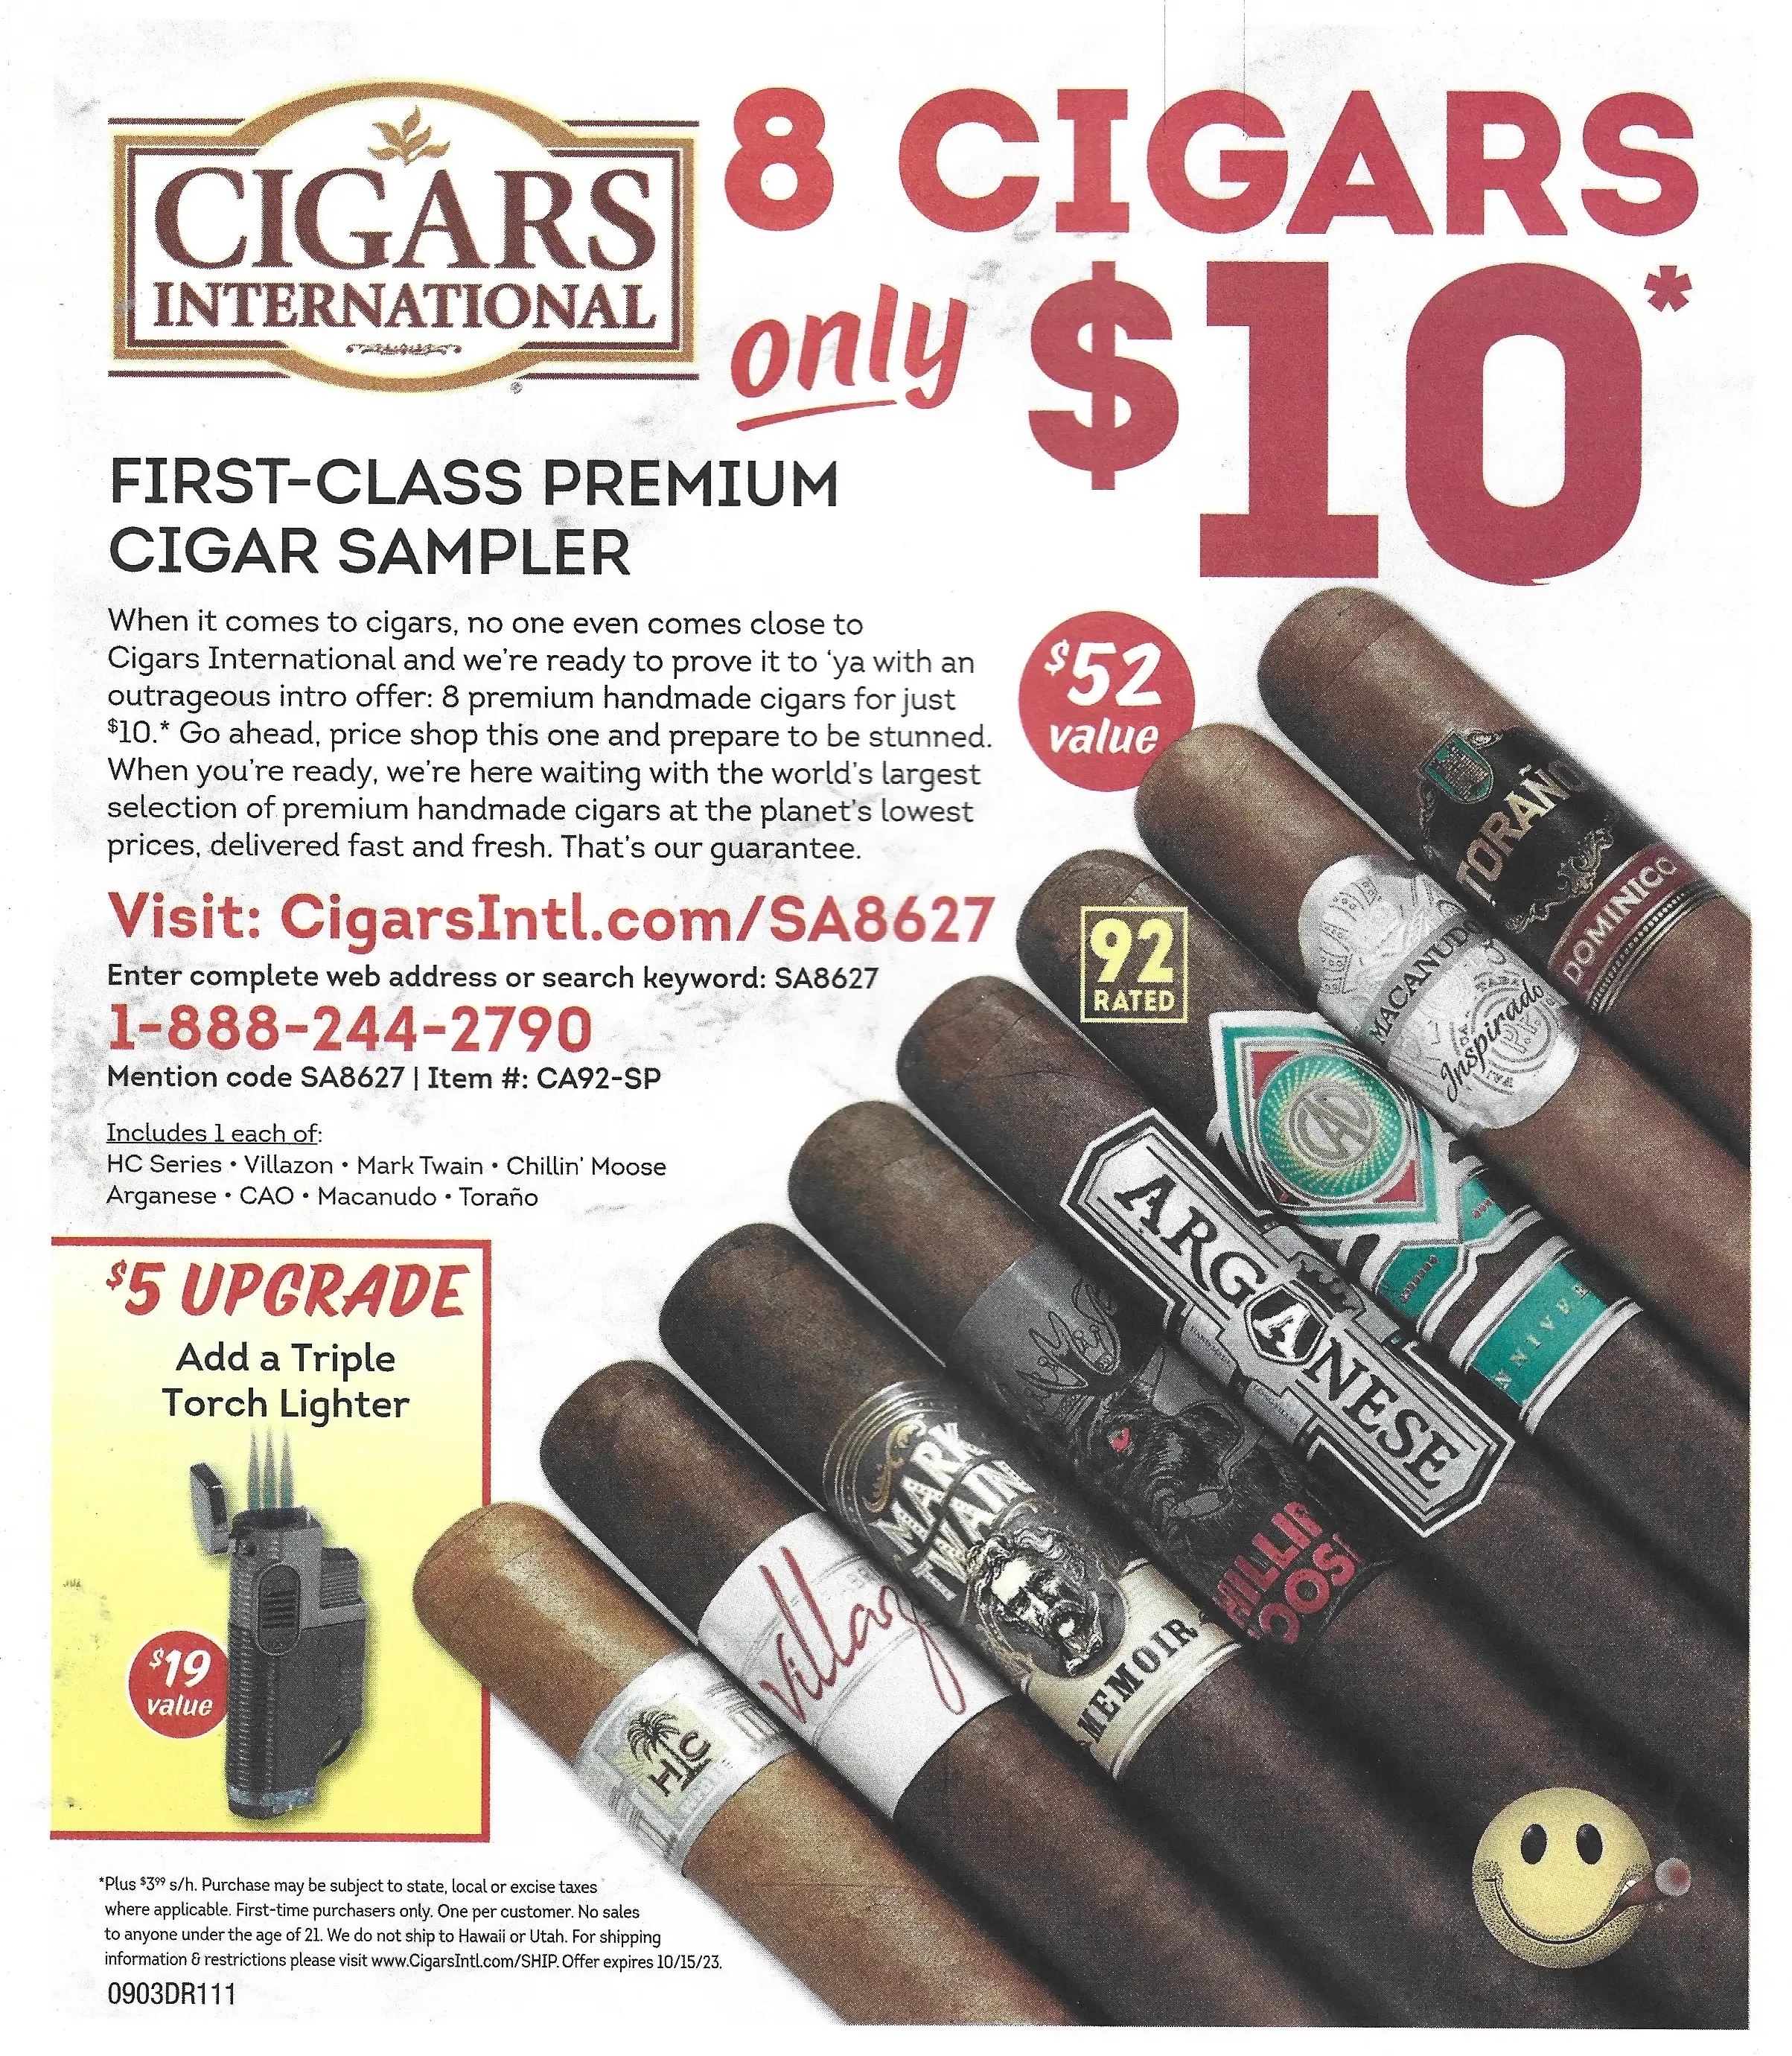 Cigars International First-Class Premium Cigar Sampler $52 Value - Expires 10/15/2023